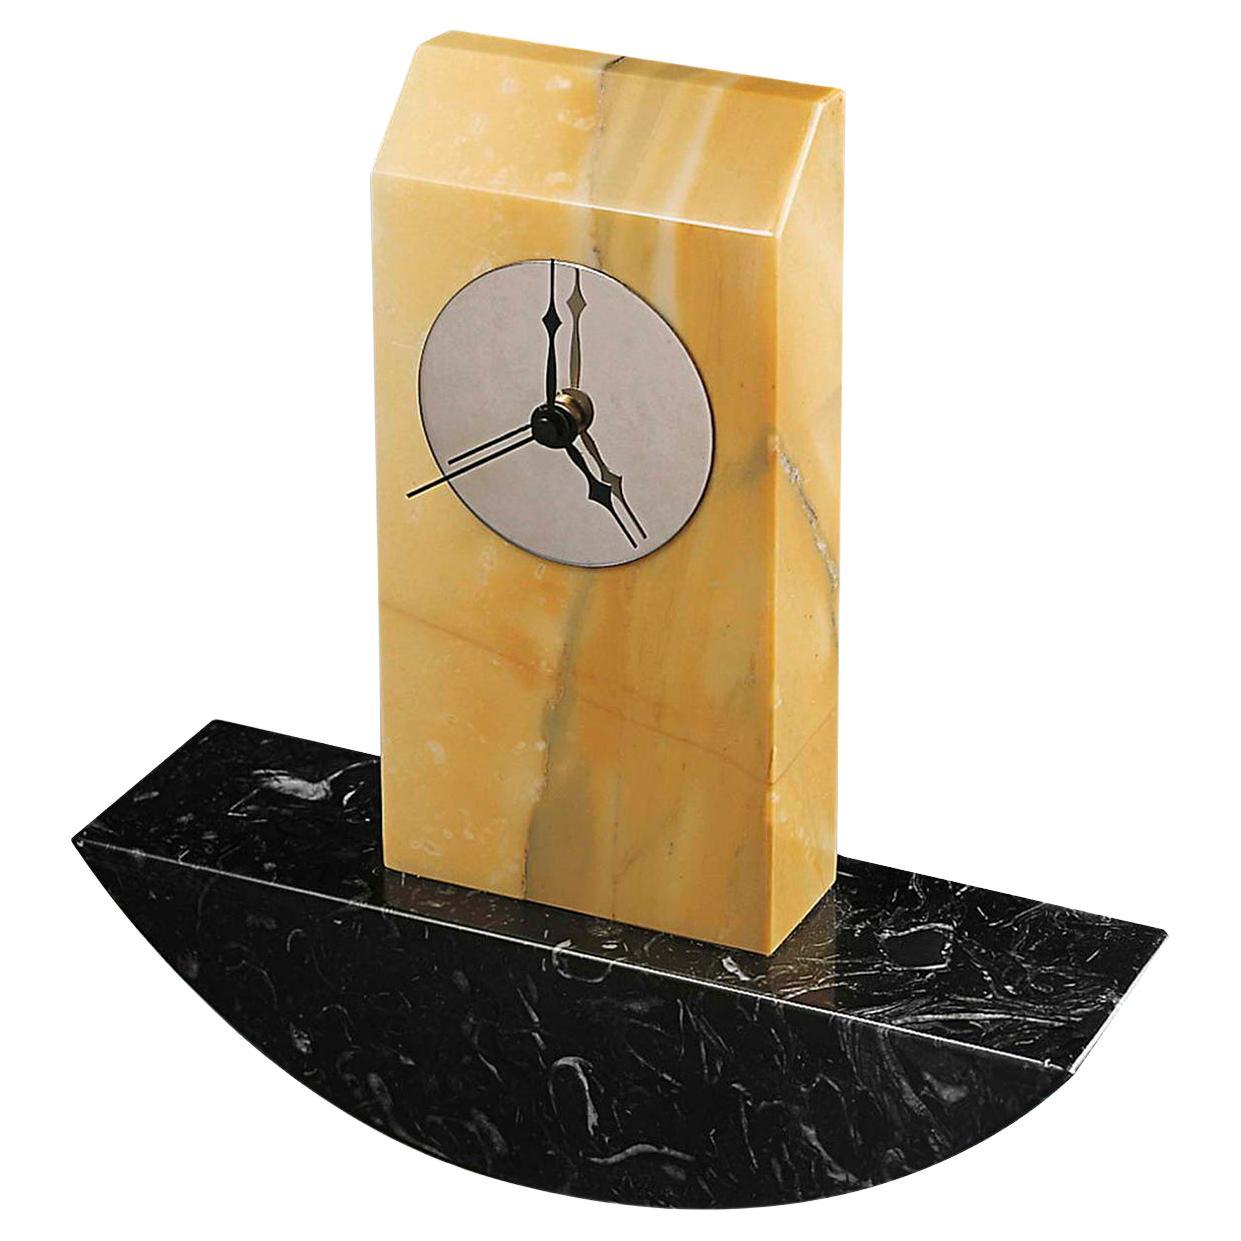 Polychrome Table Clock 5 by David Palterer